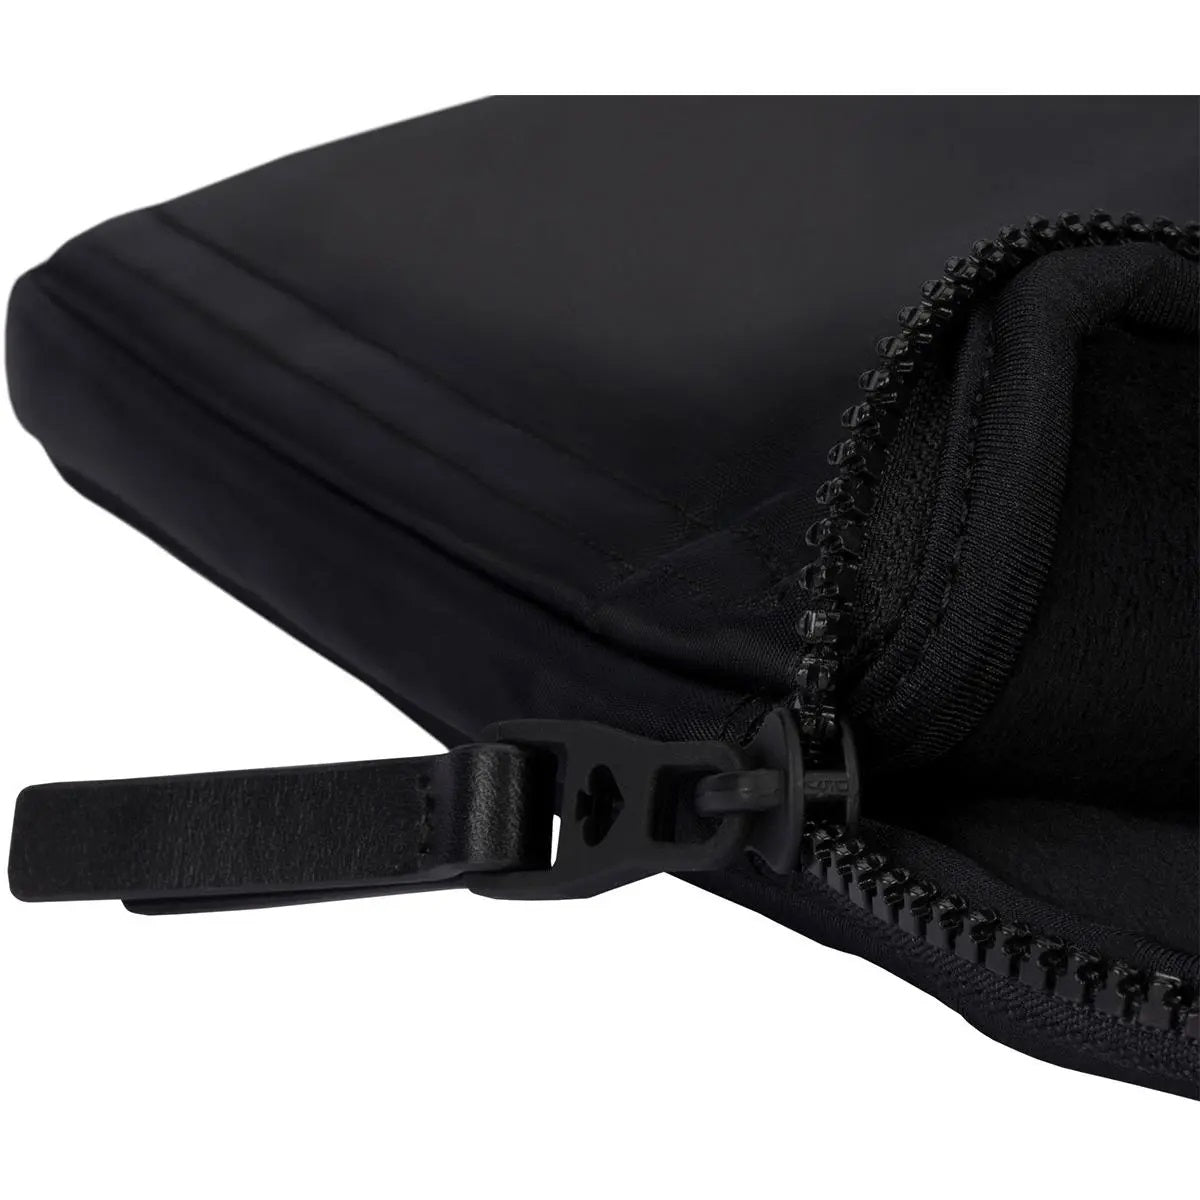 Kate Spade New York Puffer Universal Laptop Sleeve For M1 Macbook Pro (Black Nylon)